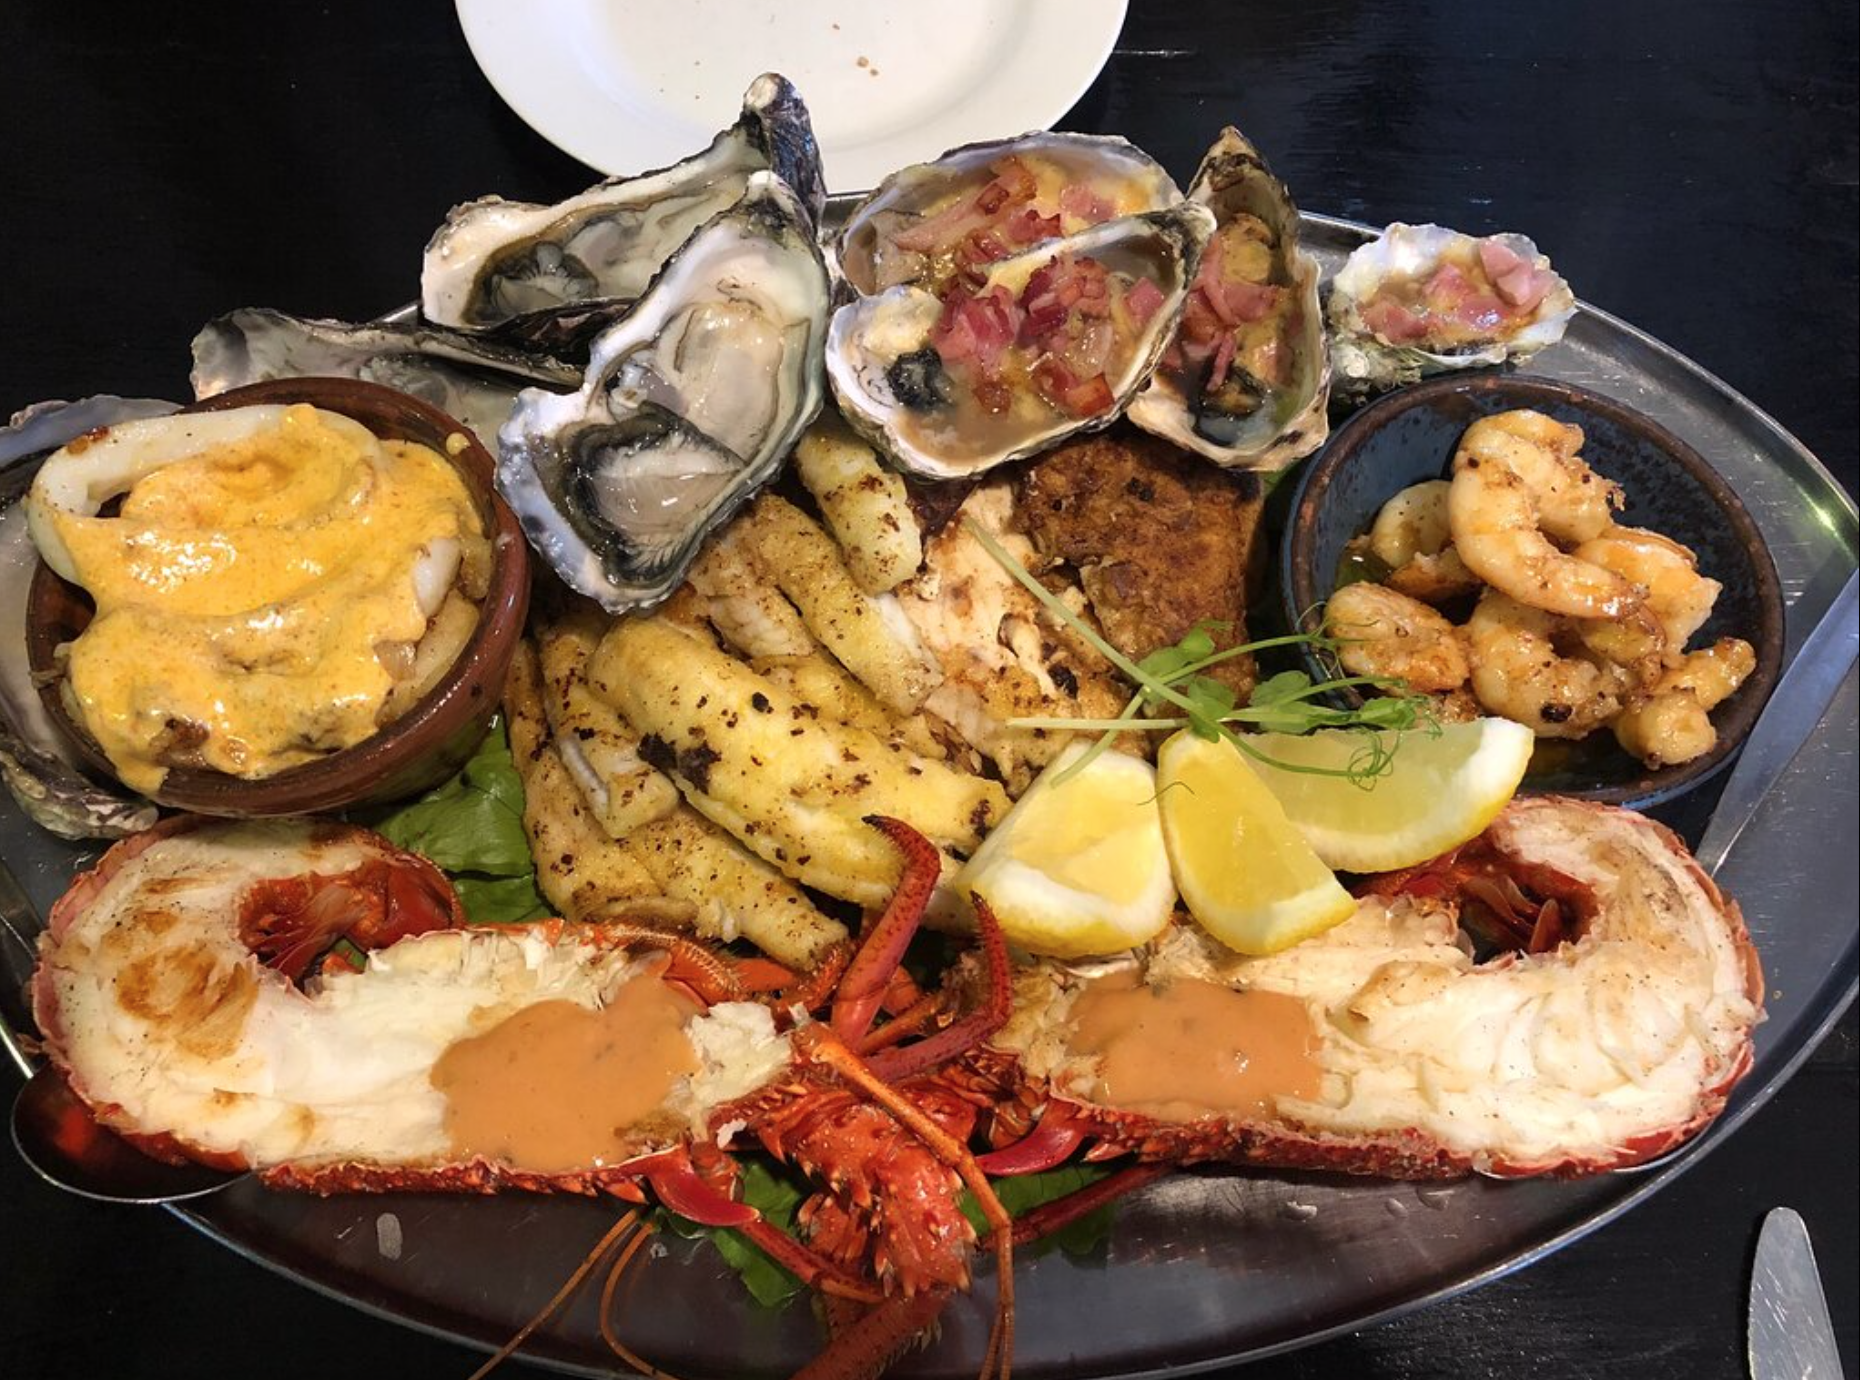 The Old Pearler Restaurant - Denham, Australia - Seafood Platter TripAdvisor Traveler photo submitted by Mandy B (Oct 2020)